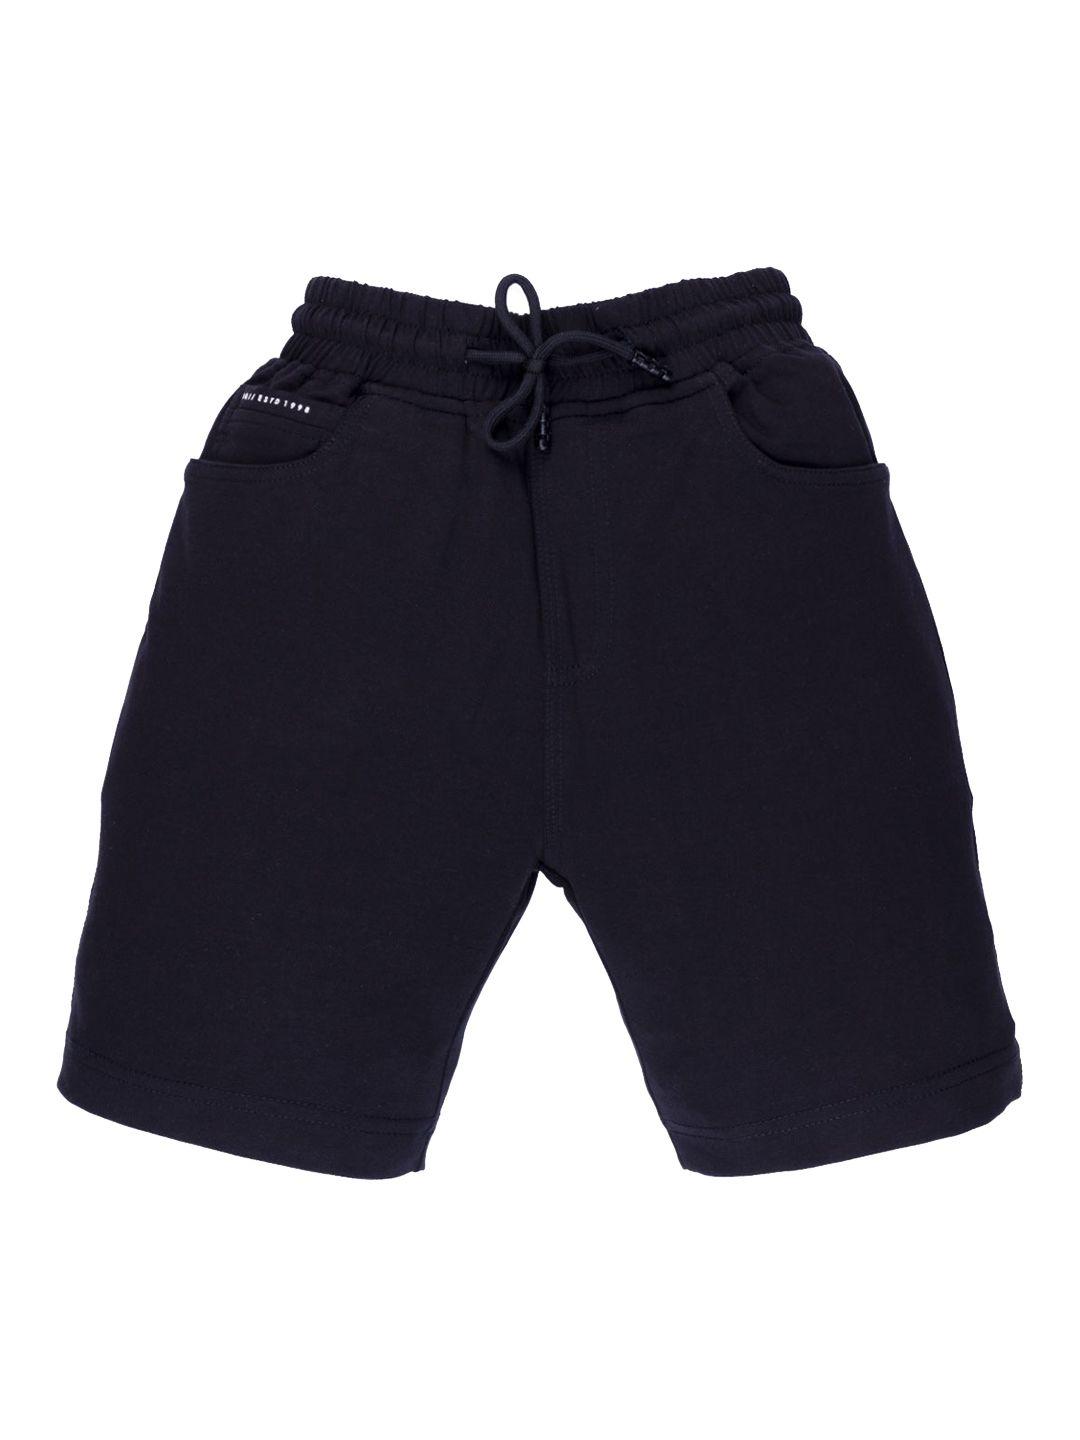 status quo boys black high-rise shorts